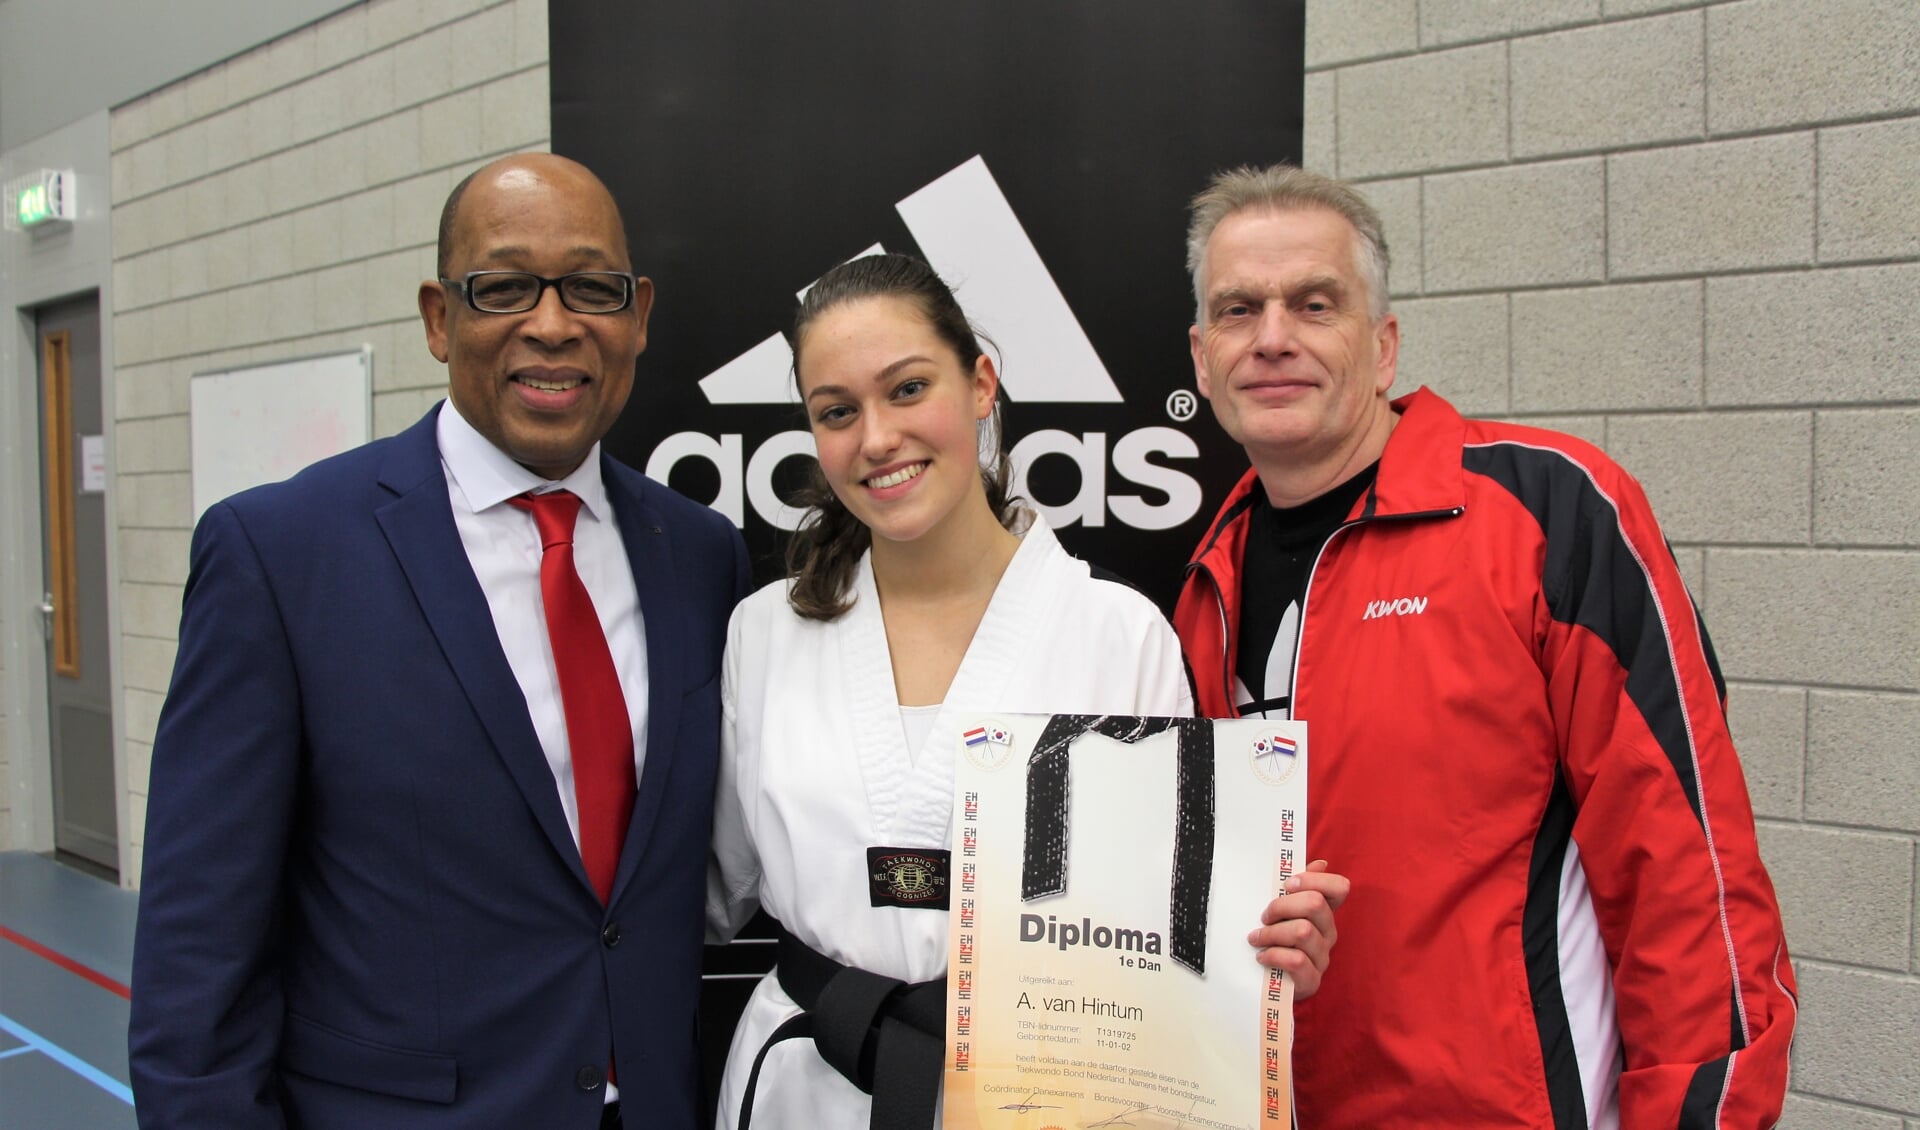 Foto boven: Hoofdtrainer Sylvestro van der Kooye, Ambra van Hintum met diploma, en trainer Henny van den Brink.